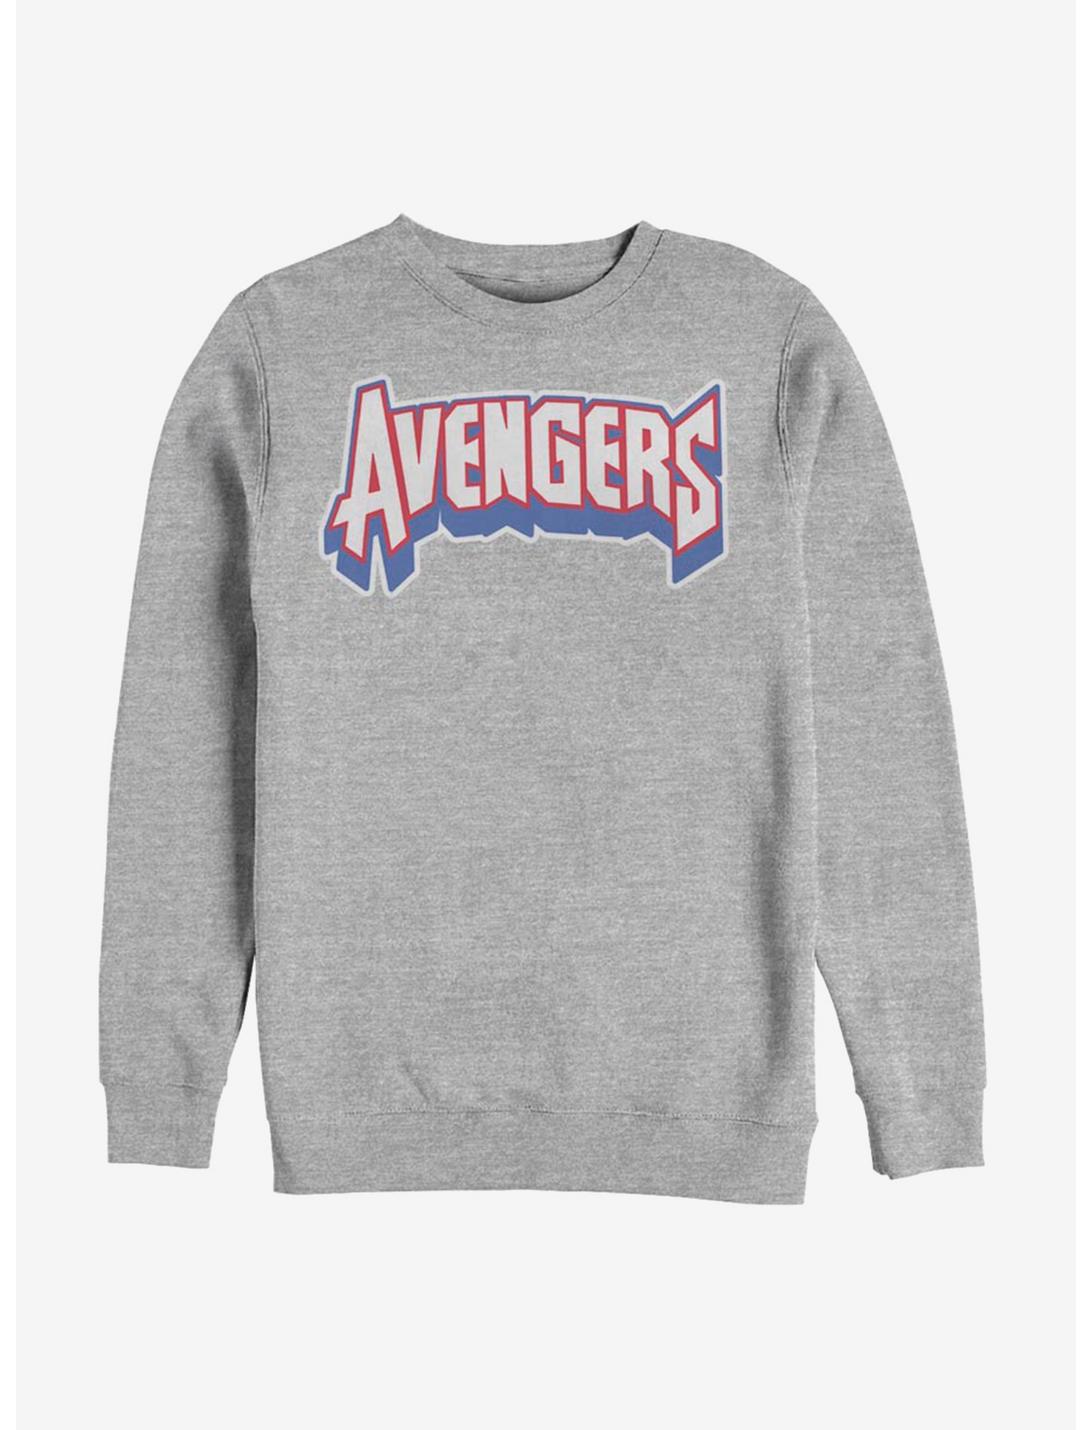 Avengers Chenille Sweatshirt, ATH HTR, hi-res